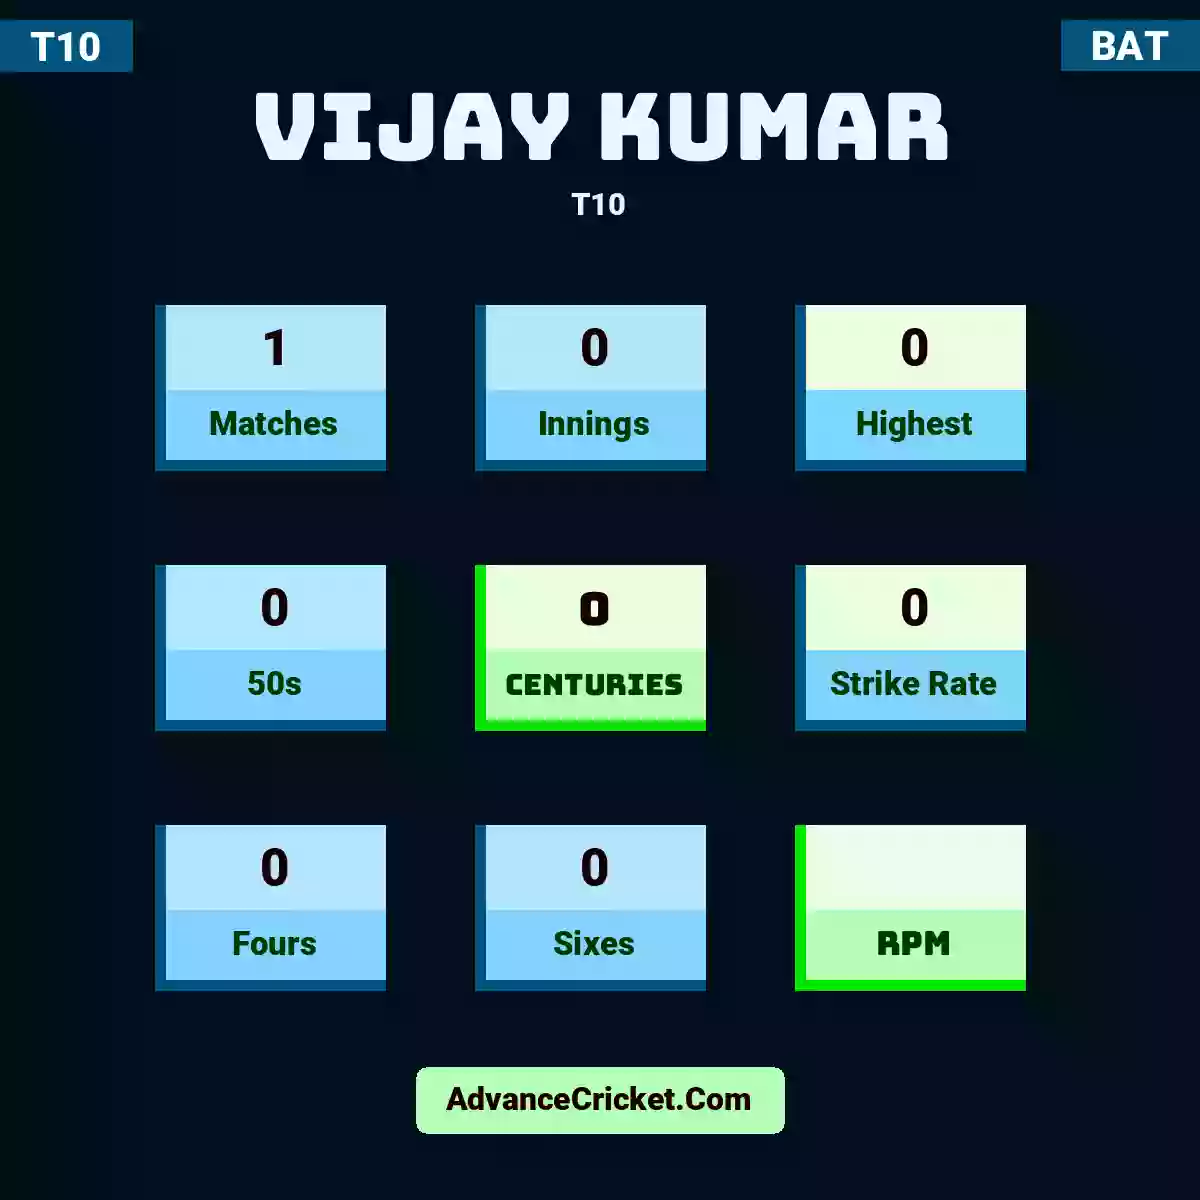 Vijay Kumar T10 , Vijay Kumar played 1 matches, scored 0 runs as highest, 0 half-centuries, and 0 centuries, with a strike rate of 0. V.Kumar hit 0 fours and 0 sixes.